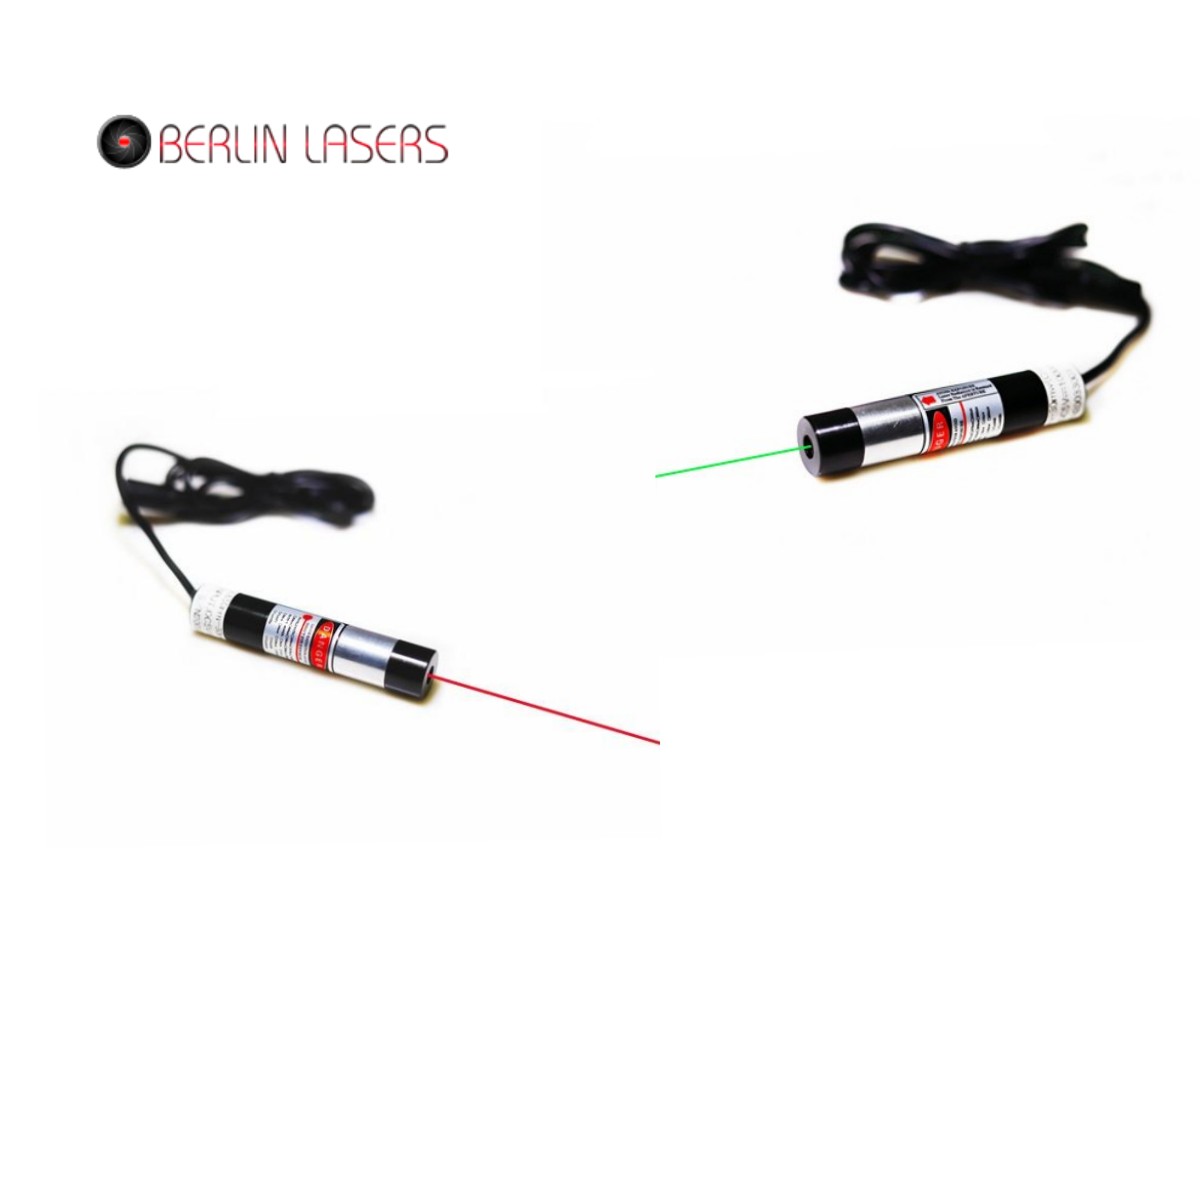 Is Green Laser Module Better Than a Red Laser Module?